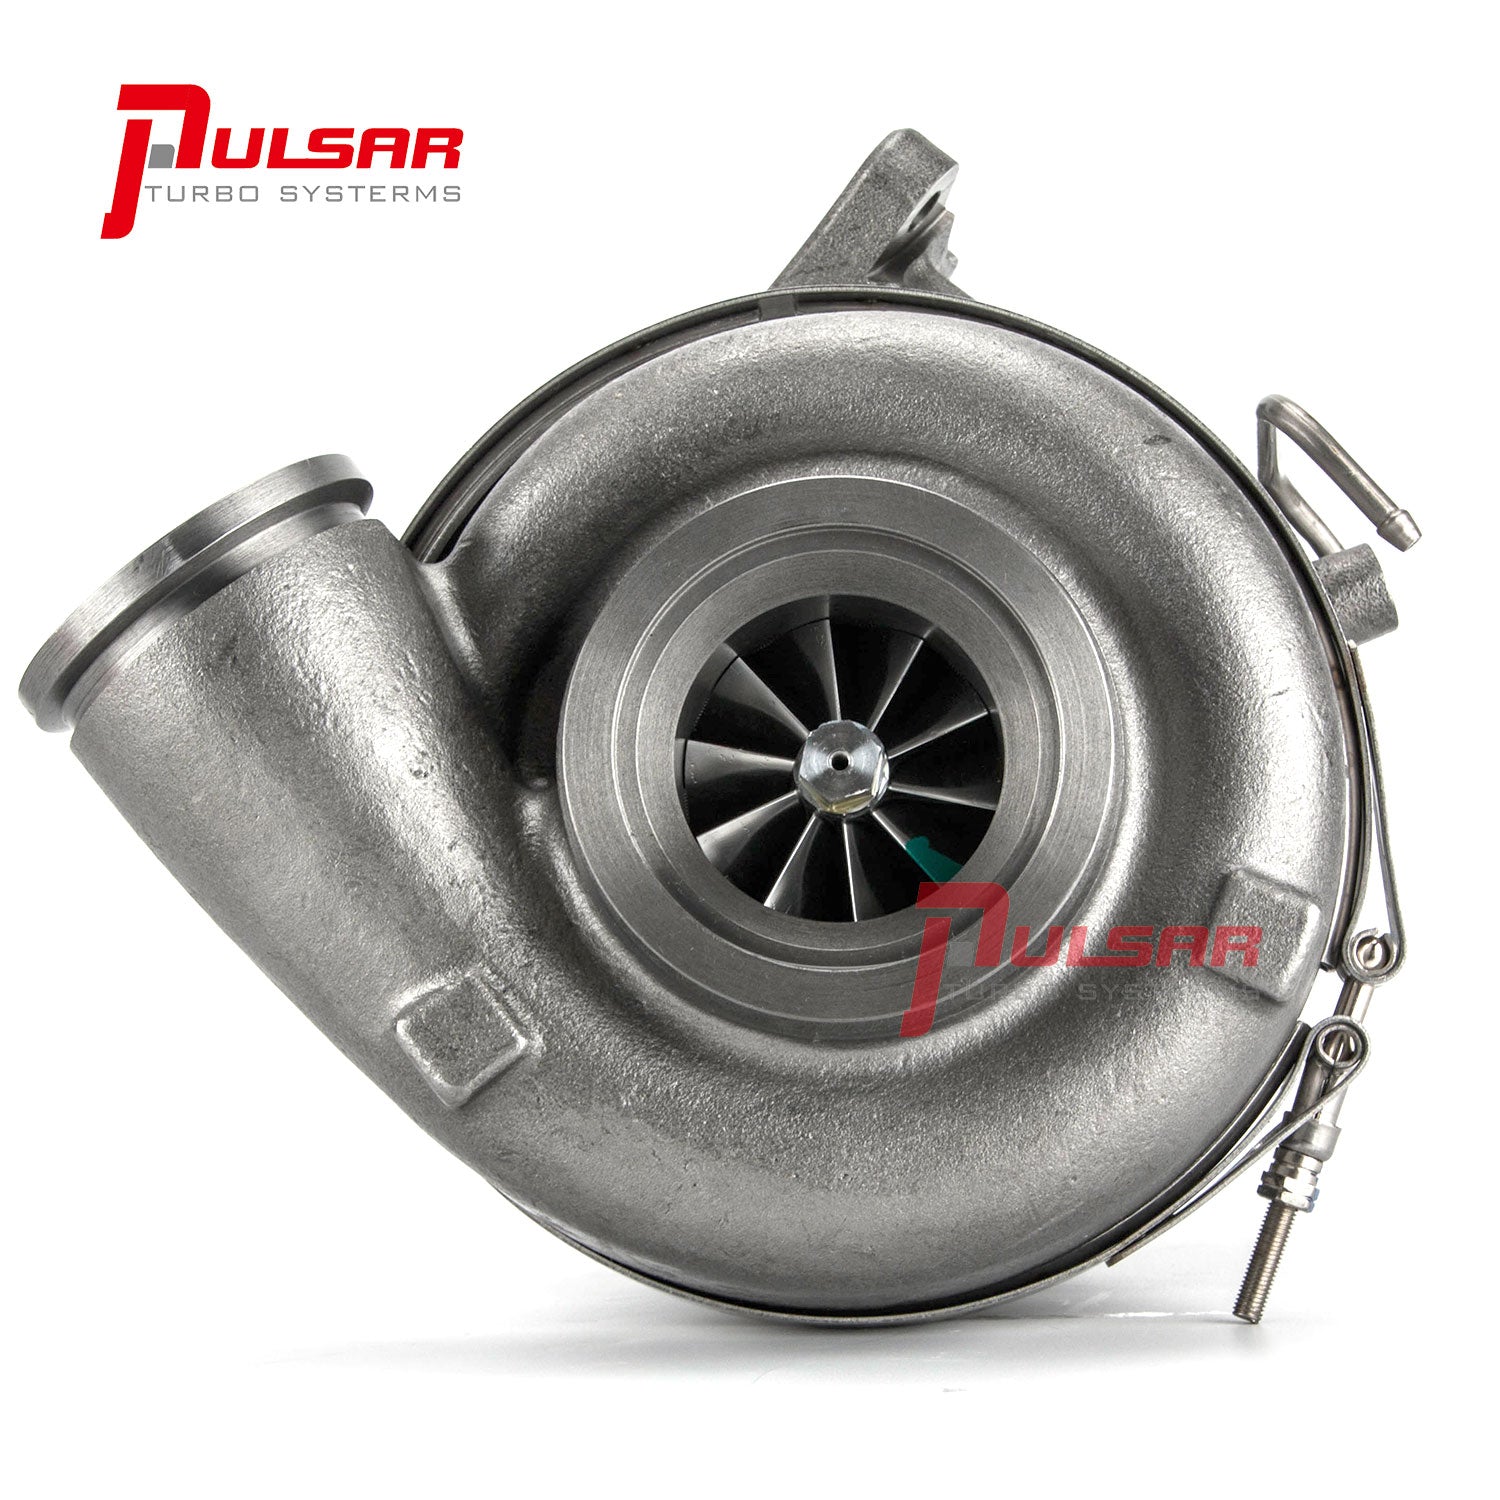 Pulsar Turbo Turbocharger for Caterpillar C13 Acert 12.5L GTA4088BS 75